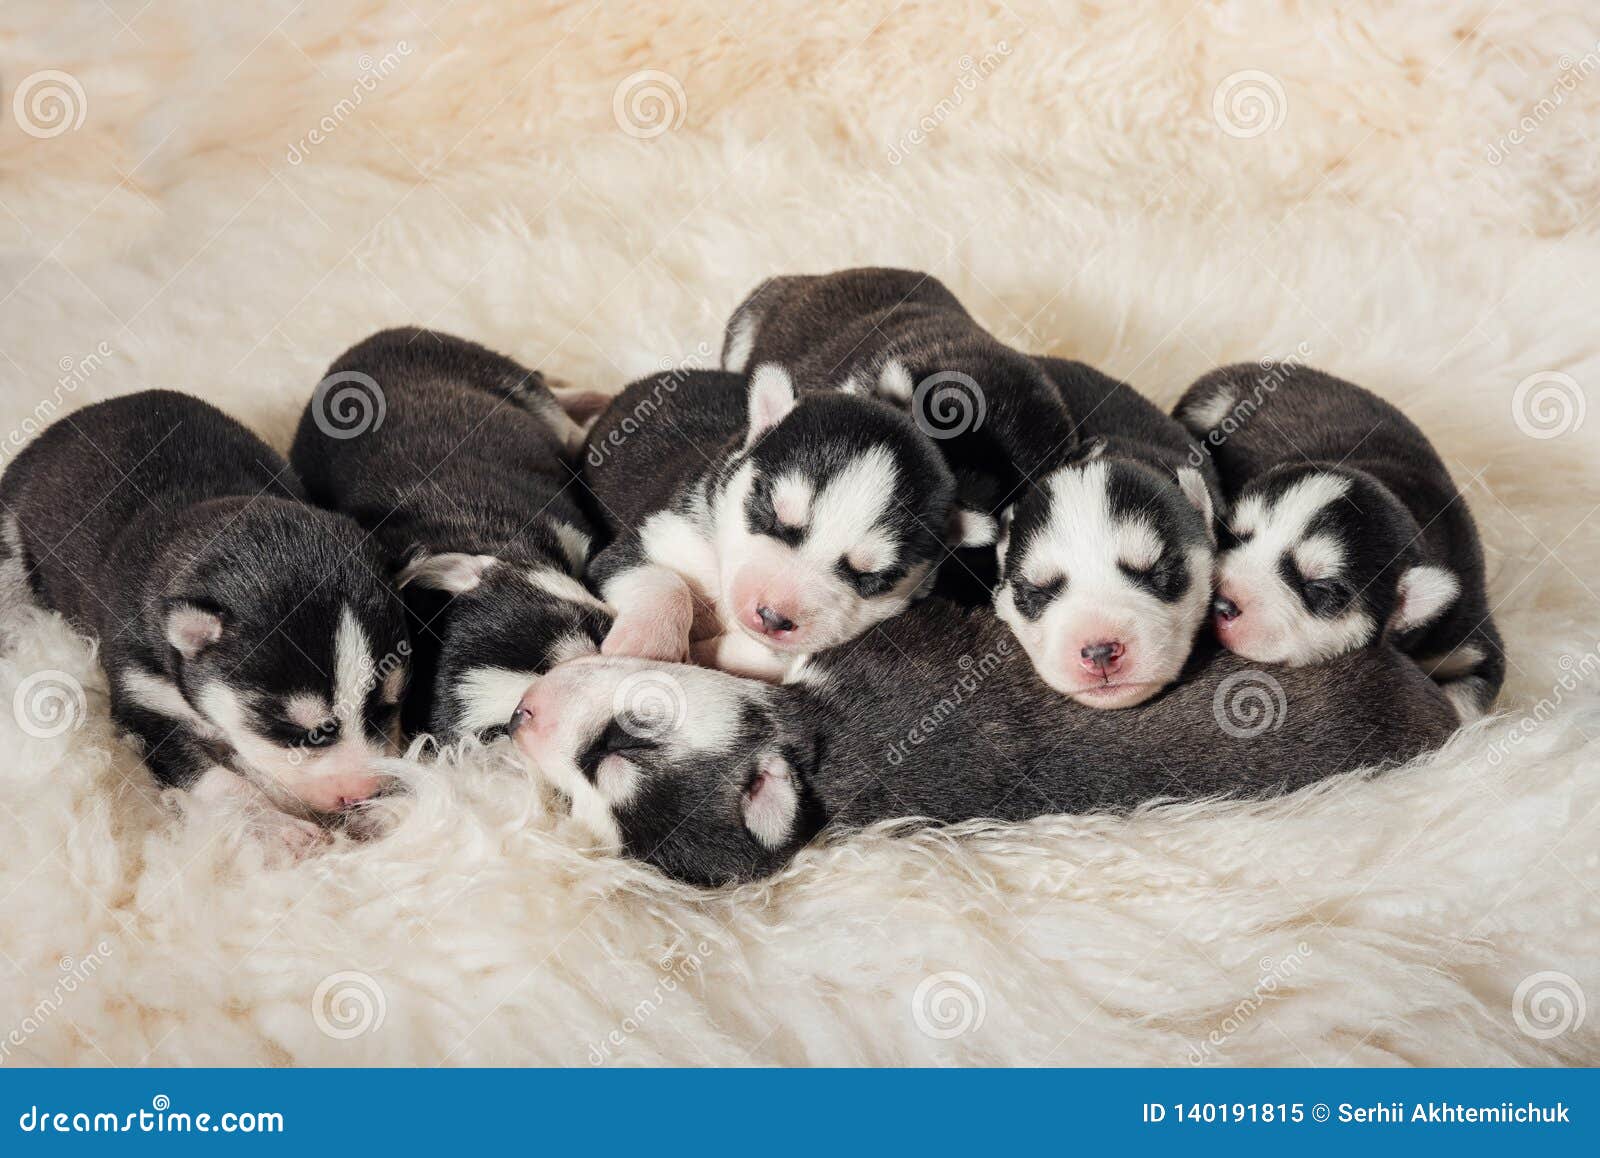 Lovely Newborn Husky Puppies Stock Image Image of